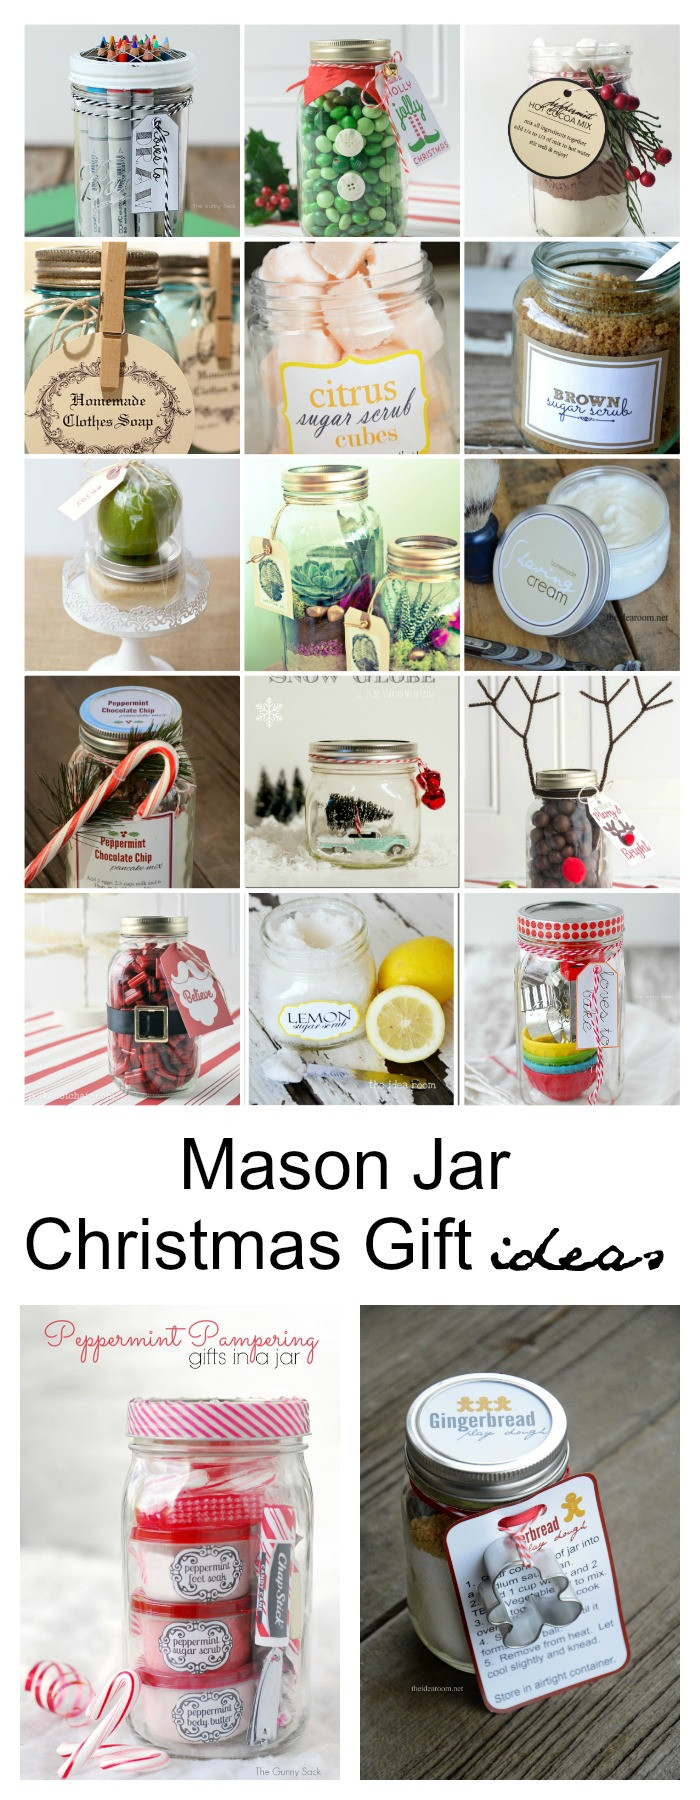 Best ideas about Mason Jars Christmas Gift Ideas
. Save or Pin Mason Jar Christmas Gift Ideas The Idea Room Now.